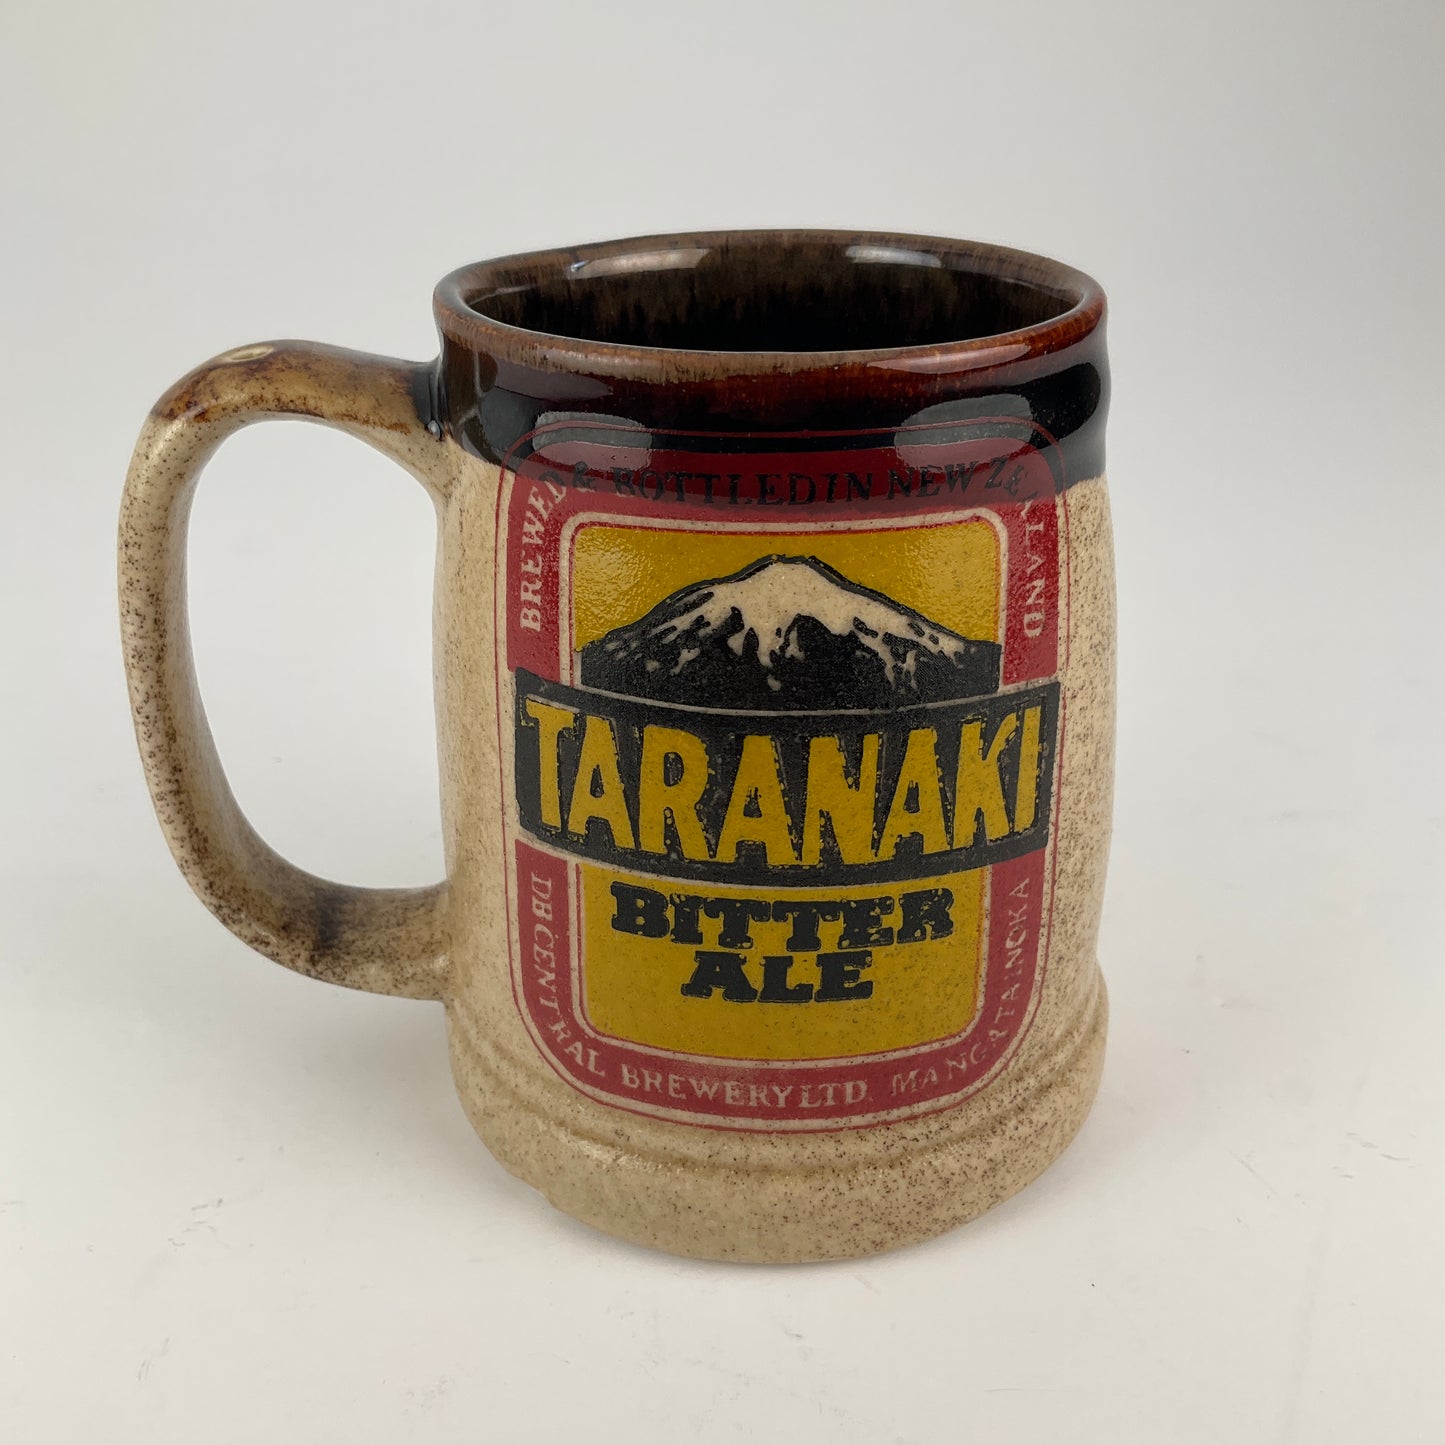 Taranaki Bitter Ale Beer Mug